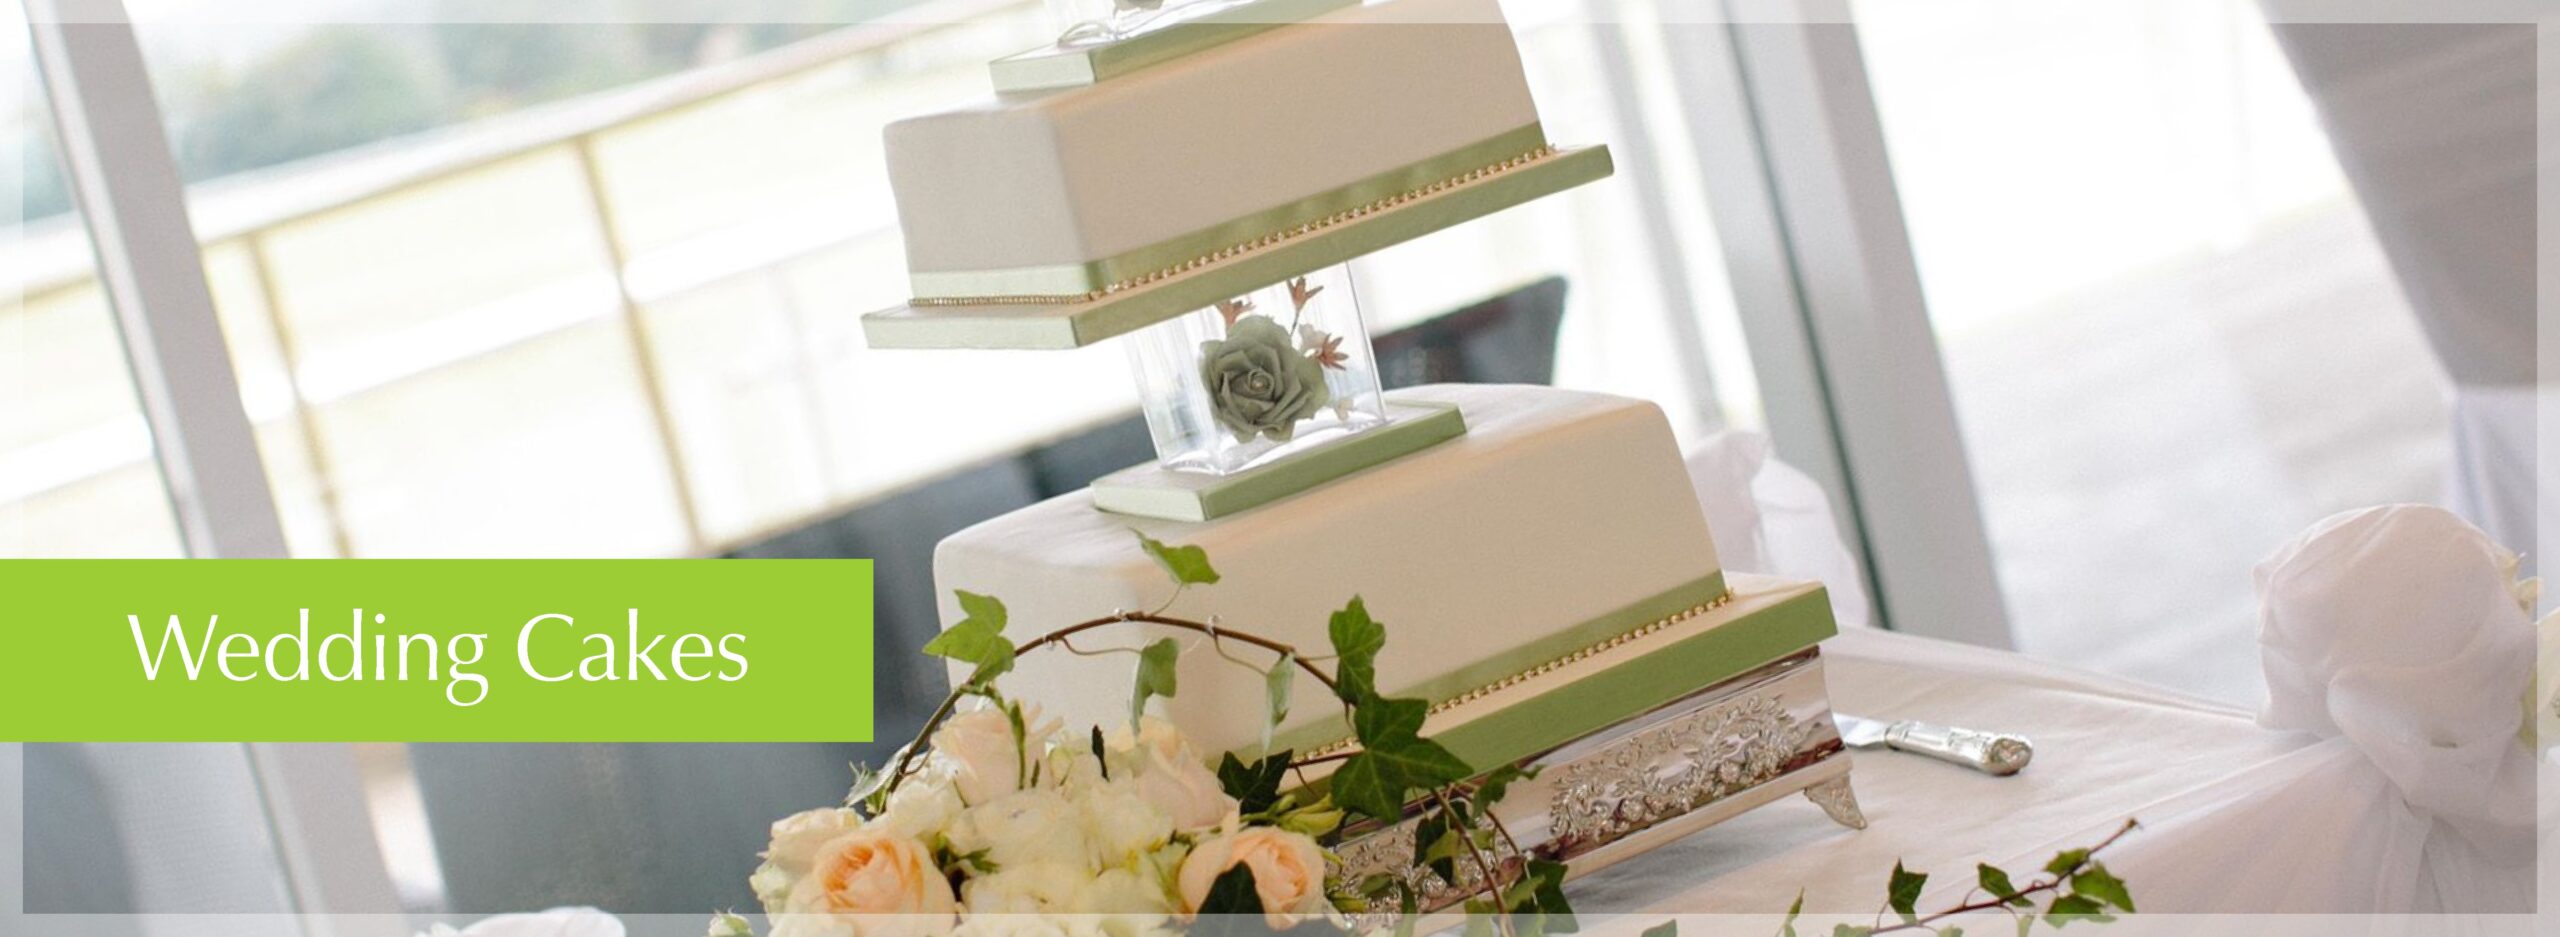 wedding cakes photo header new